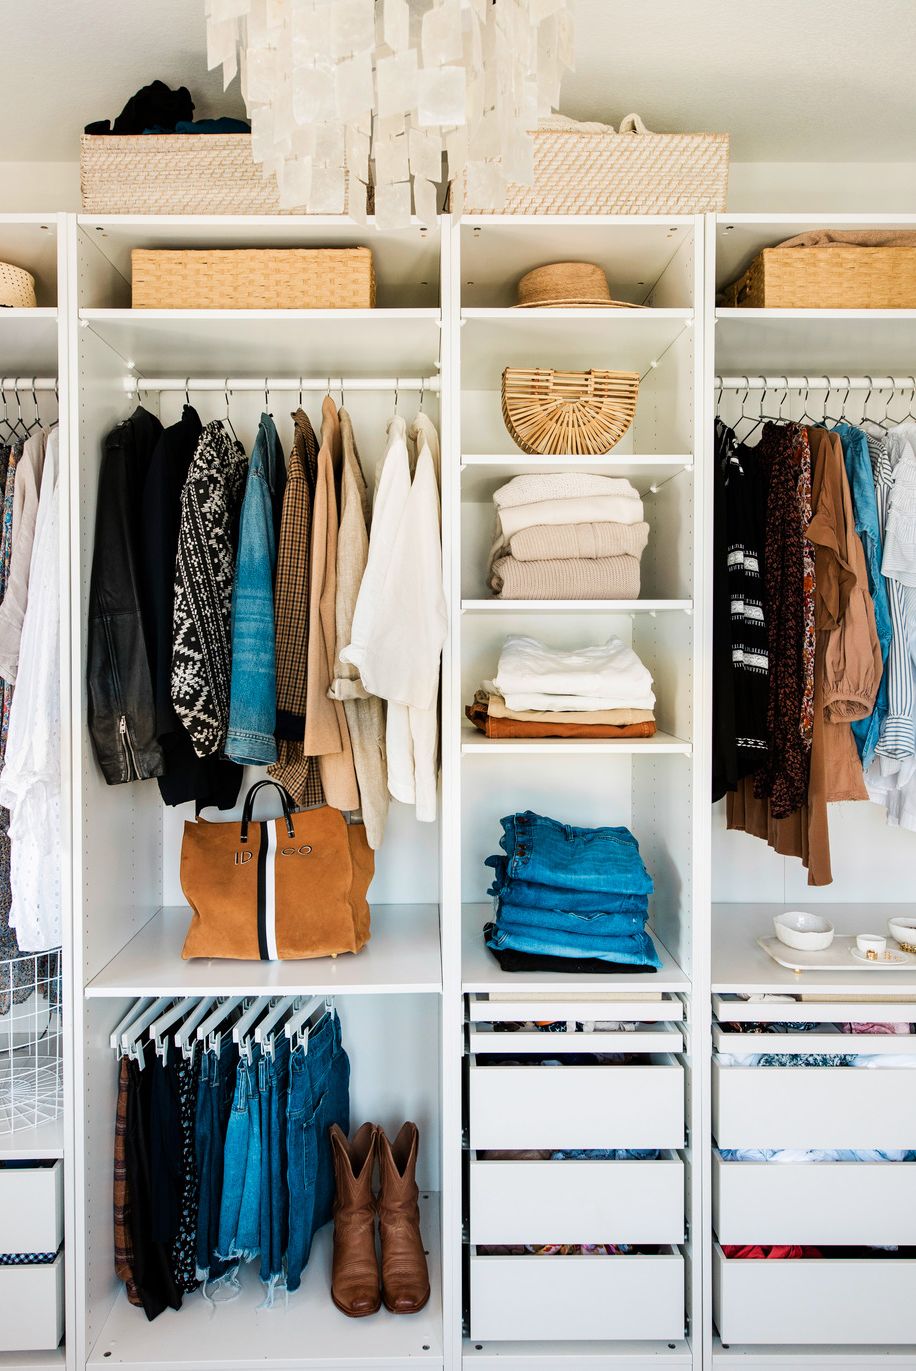 organized closet with shelves, hangers, storage baskets, drawers storage system, closet organizers